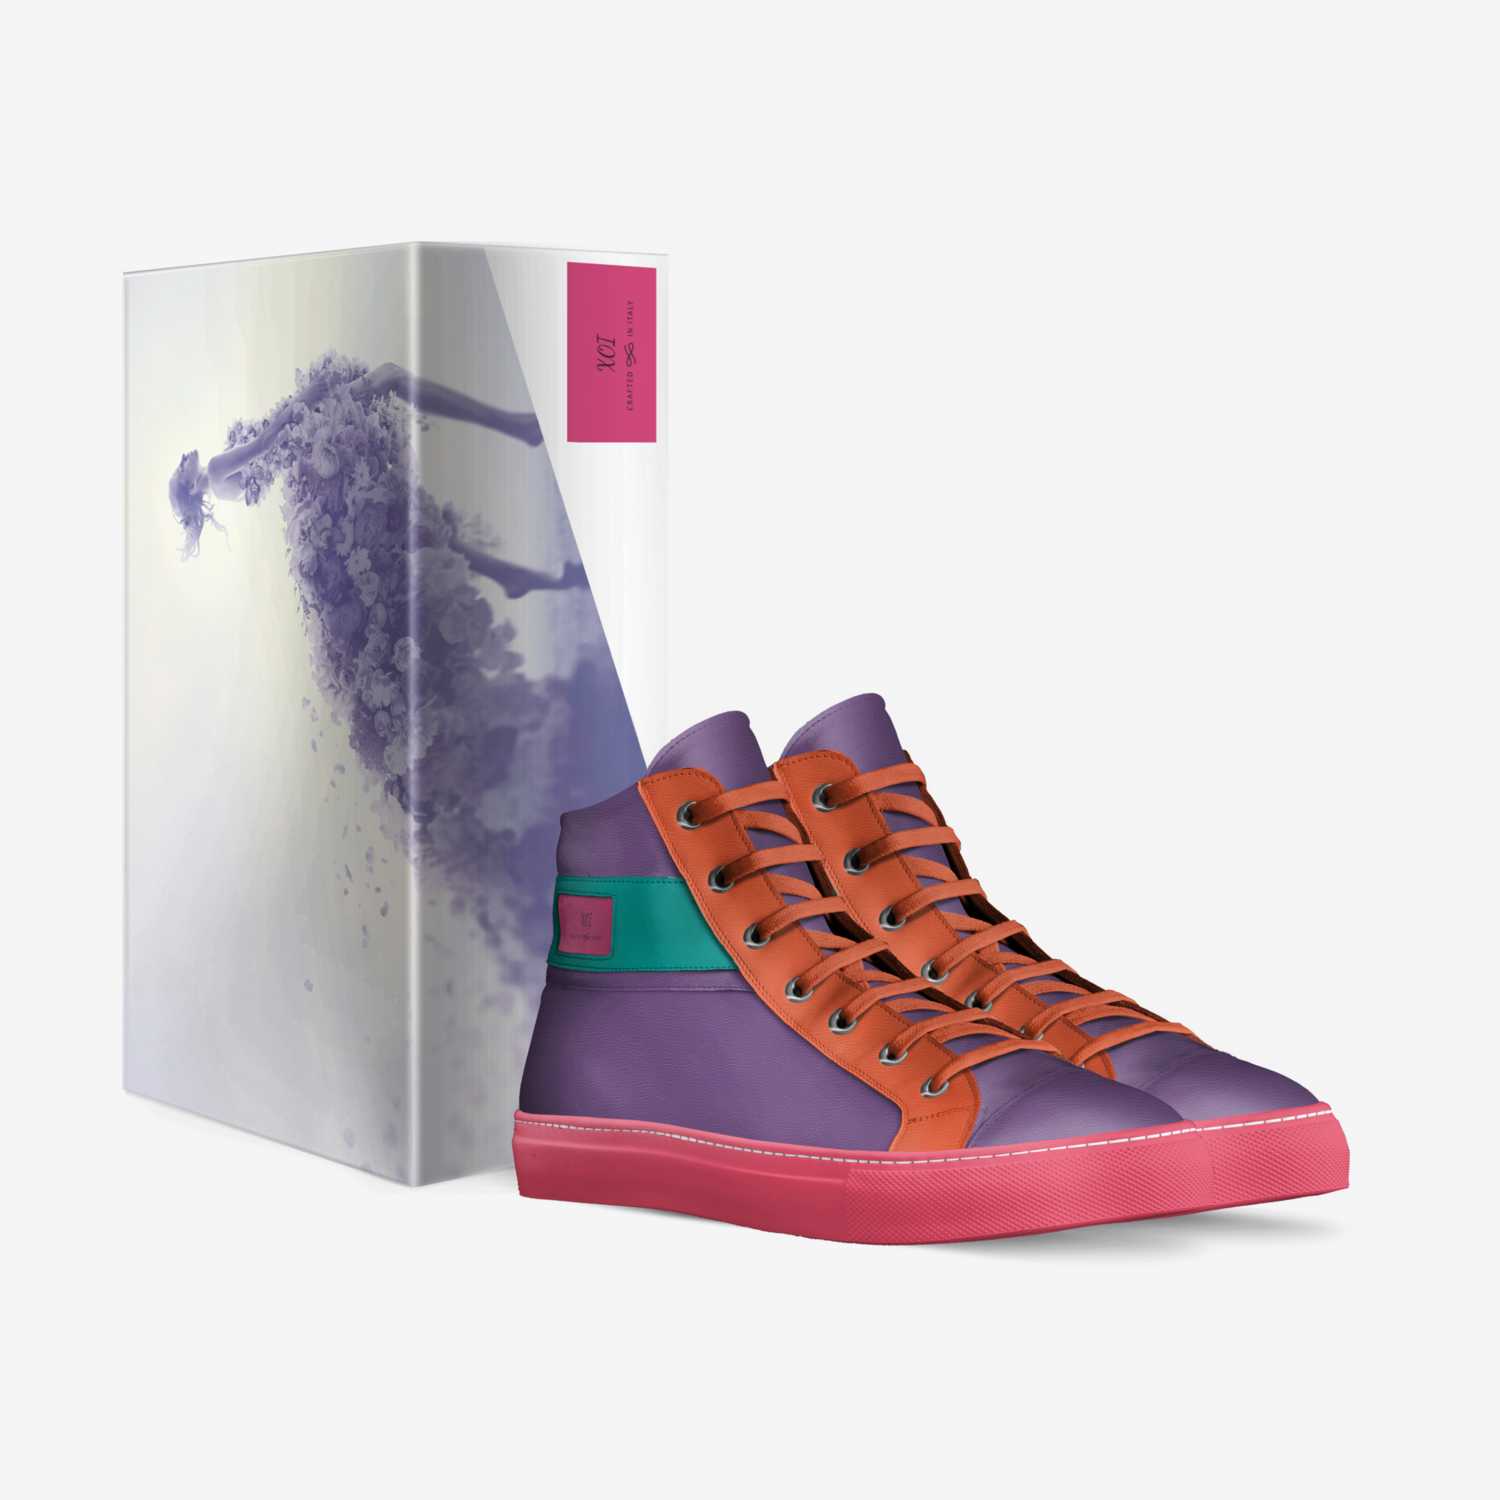 XOI custom made in Italy shoes by Sharon Hammons | Box view